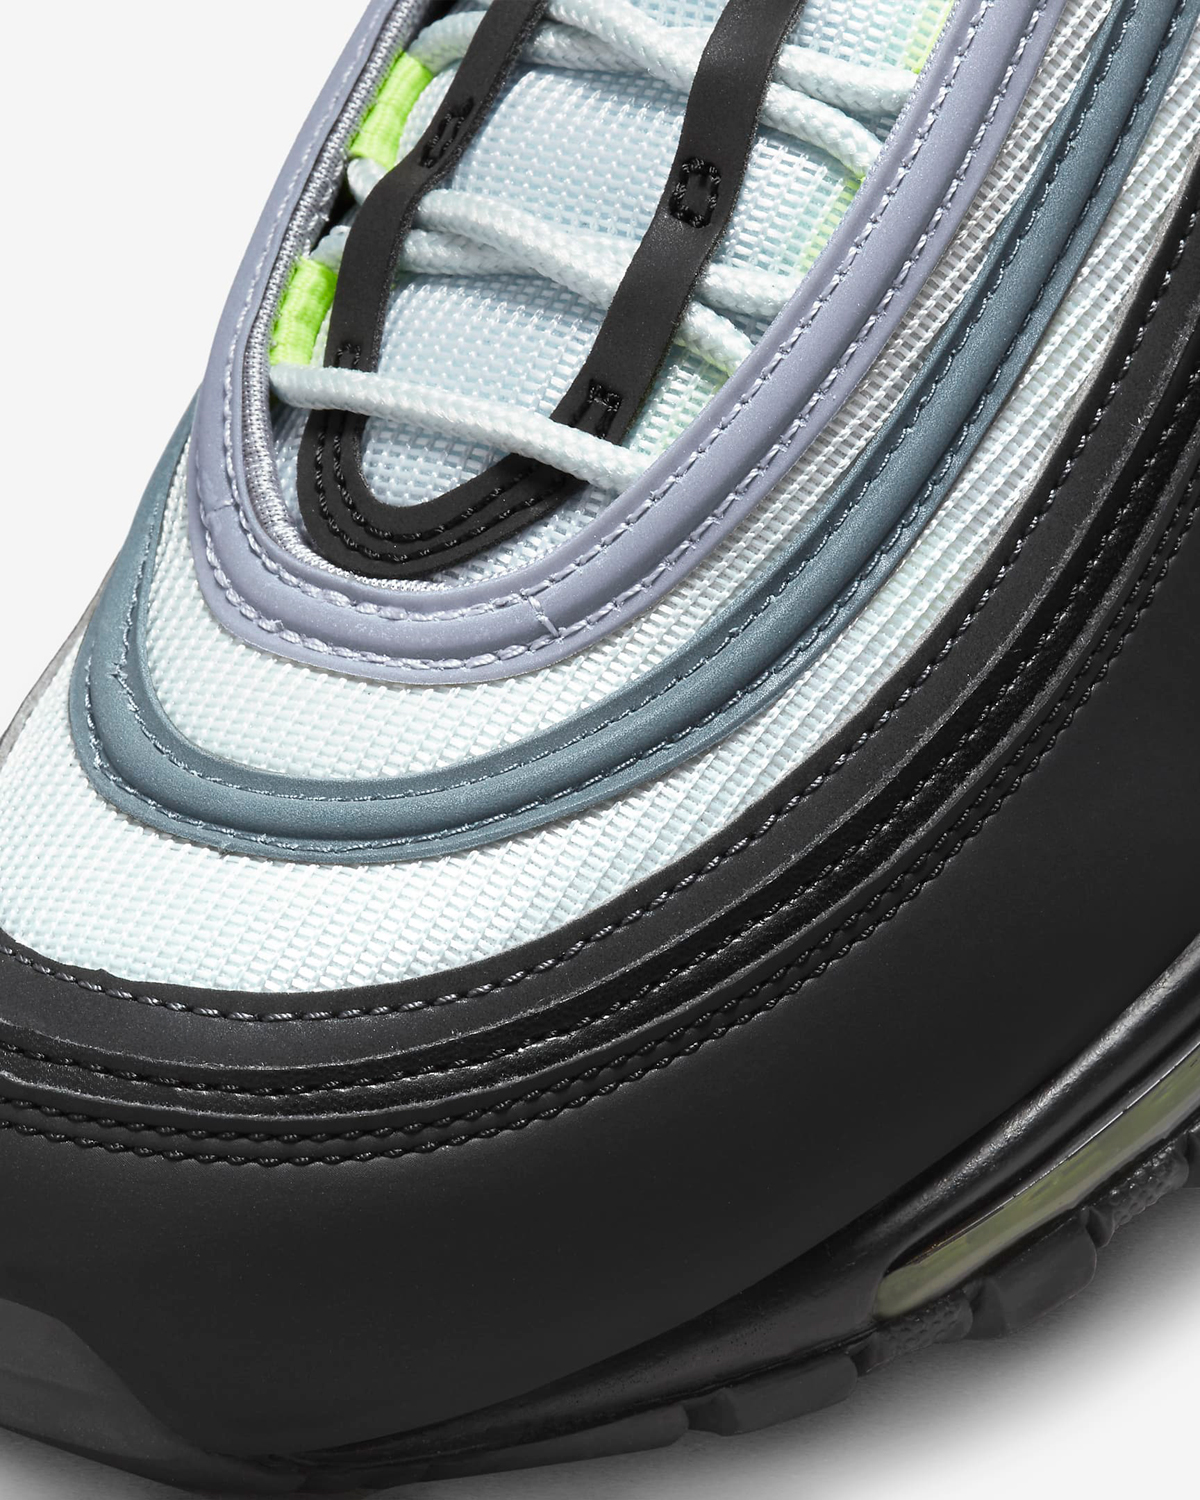 Nike-Air-Max-97-Pure-Platinum-Black-White-Volt-7